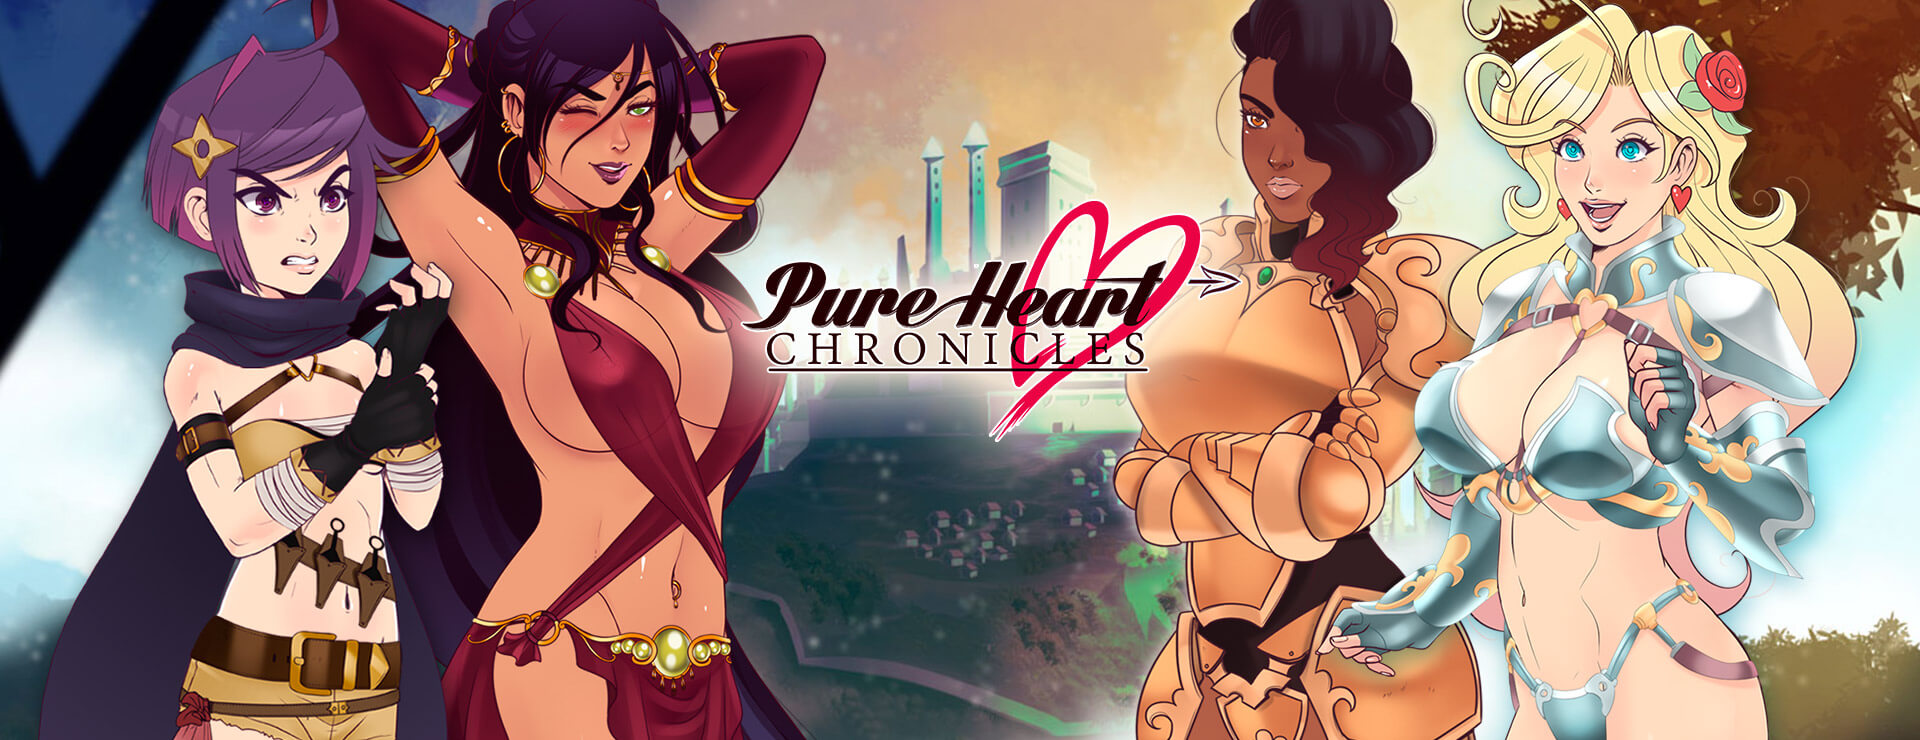 Pure Heart Chronicles - ビジュアルノベル ゲーム